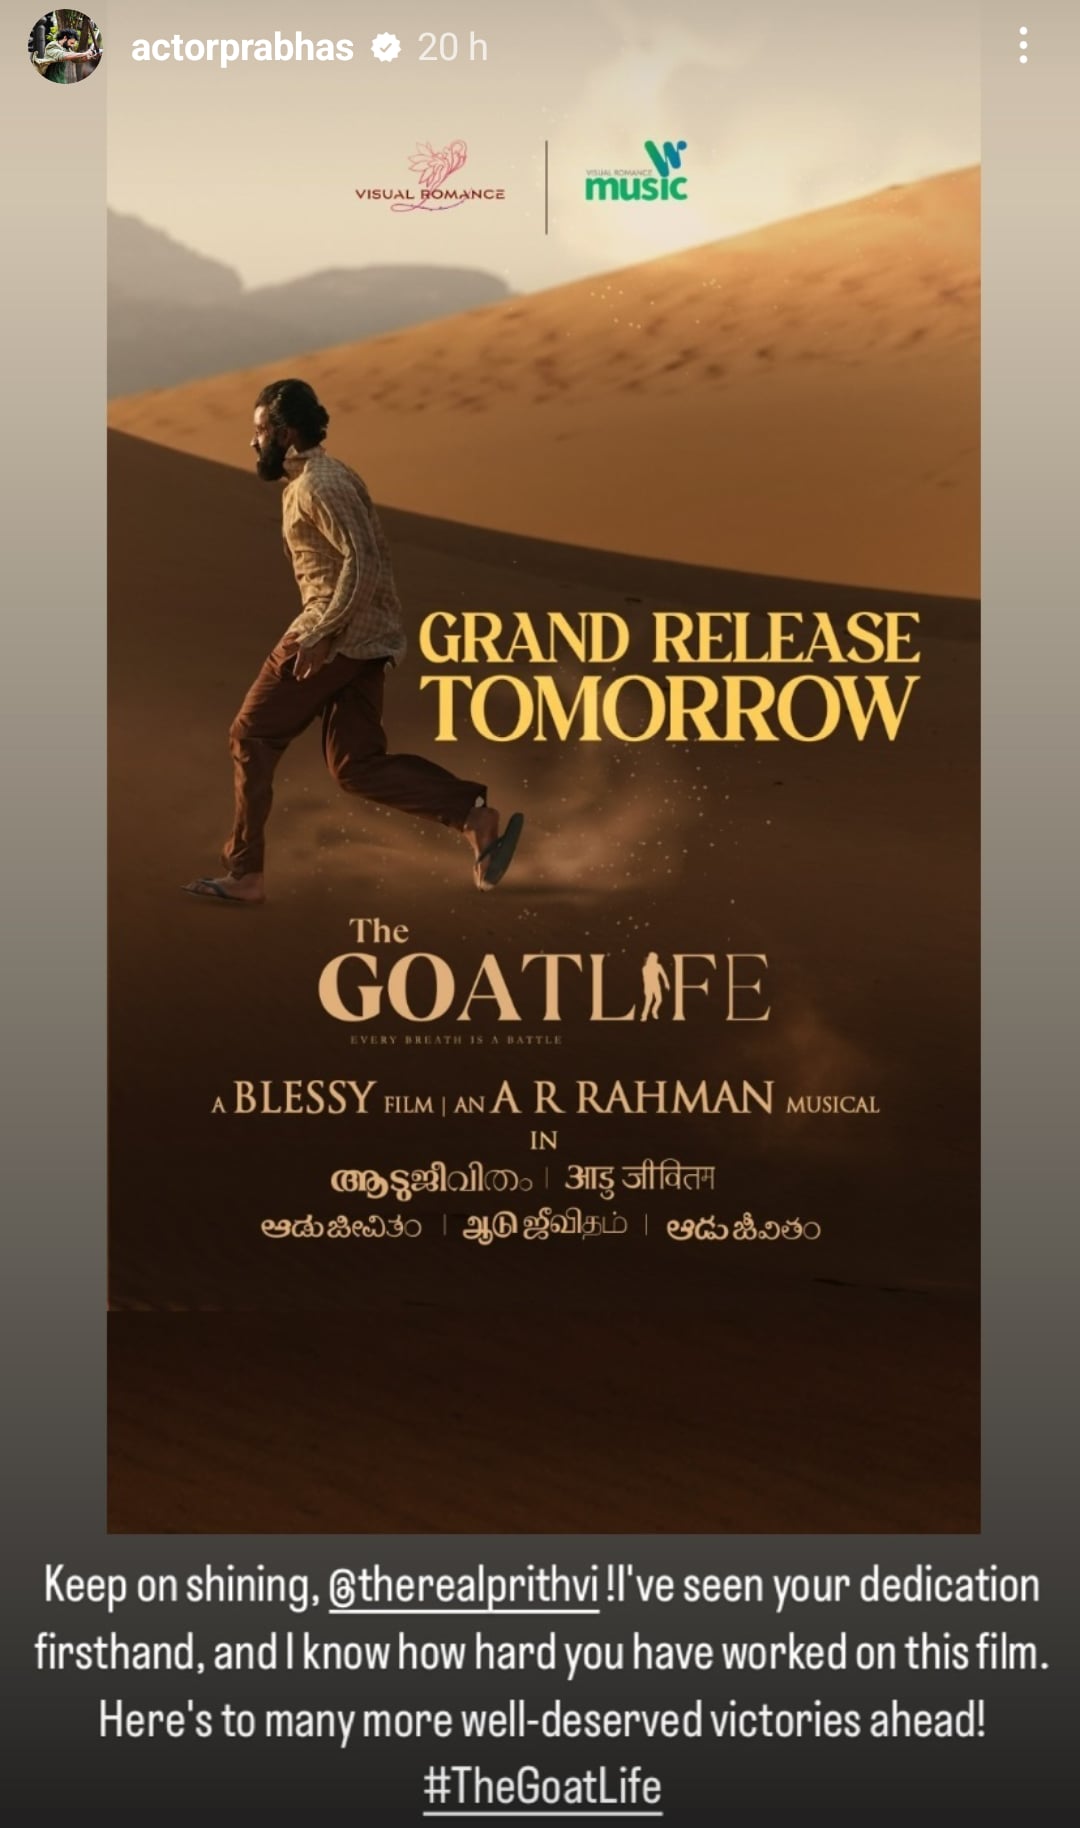 aadujeevitham - the goat life twitter reviews: fans call prithviraj sukumaran’s film a ‘masterpiece’